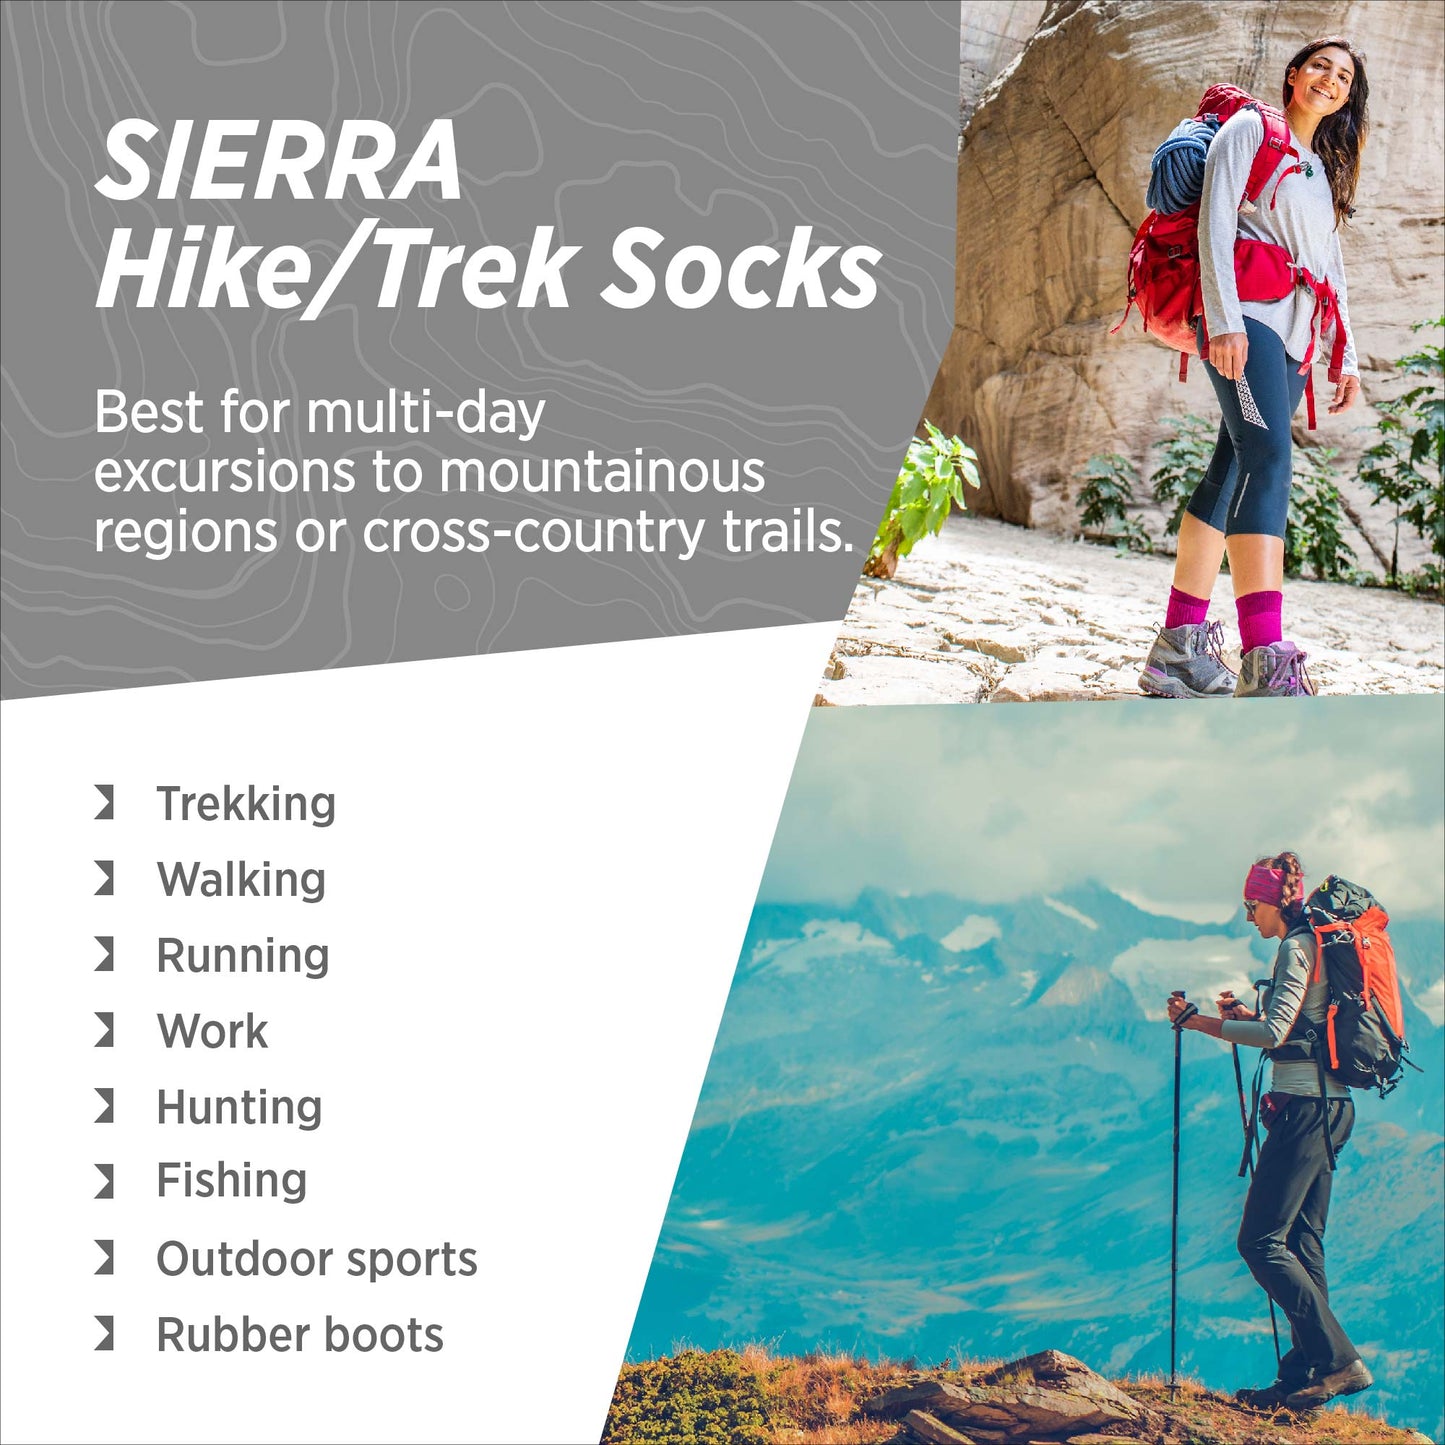 Sierra | Travel & Walk